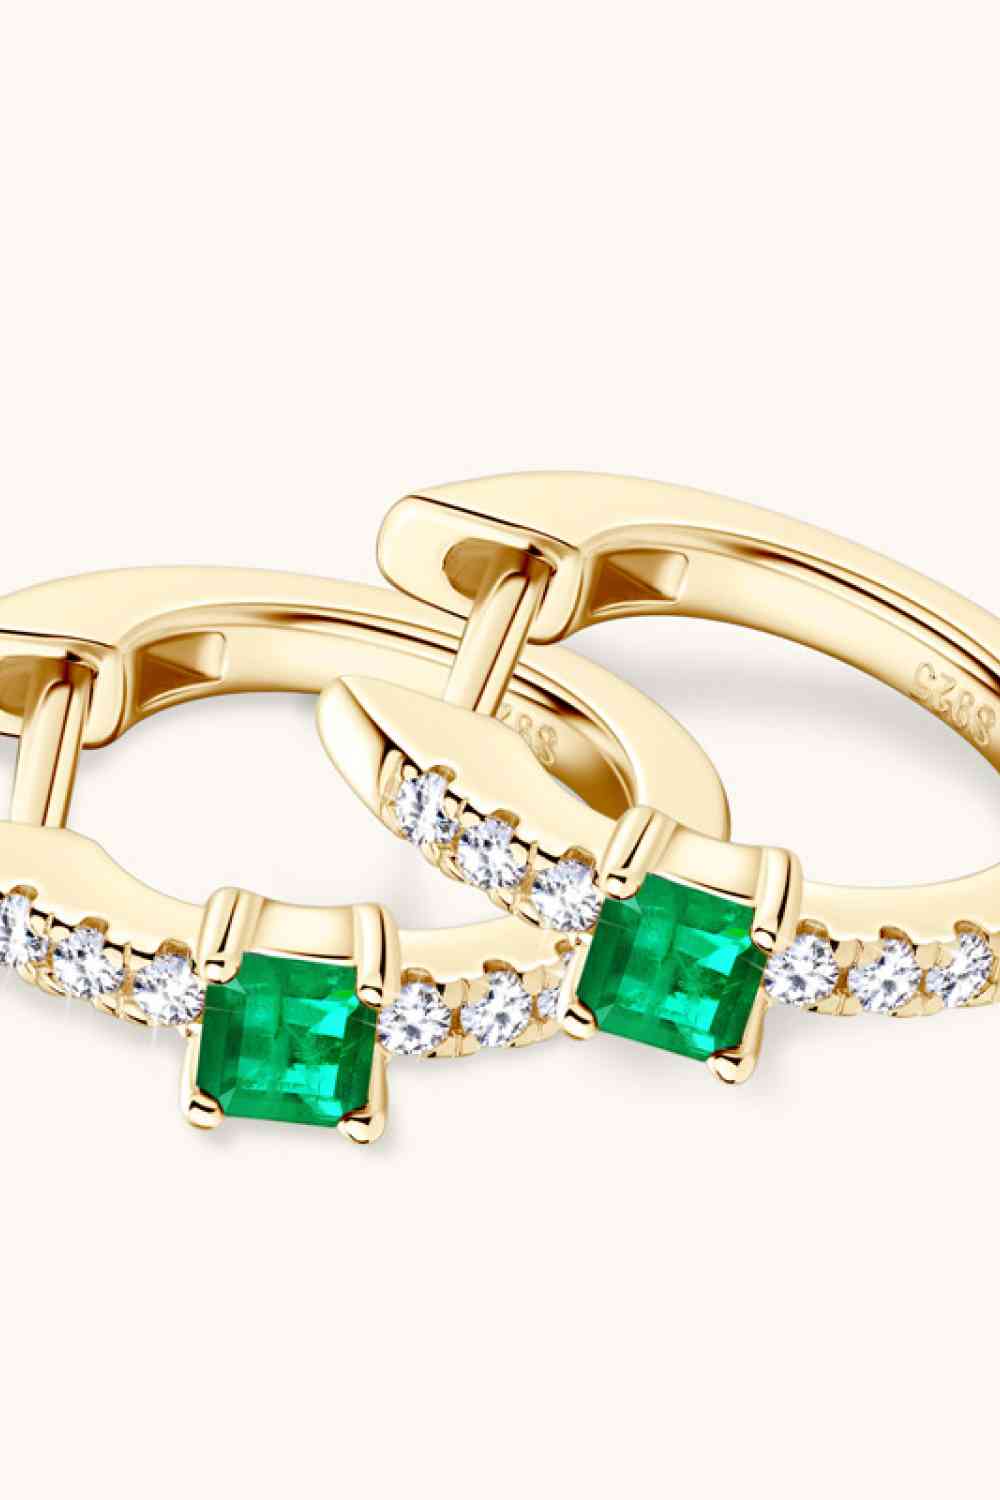 Lab-Grown Emerald Earrings  Hot Trends